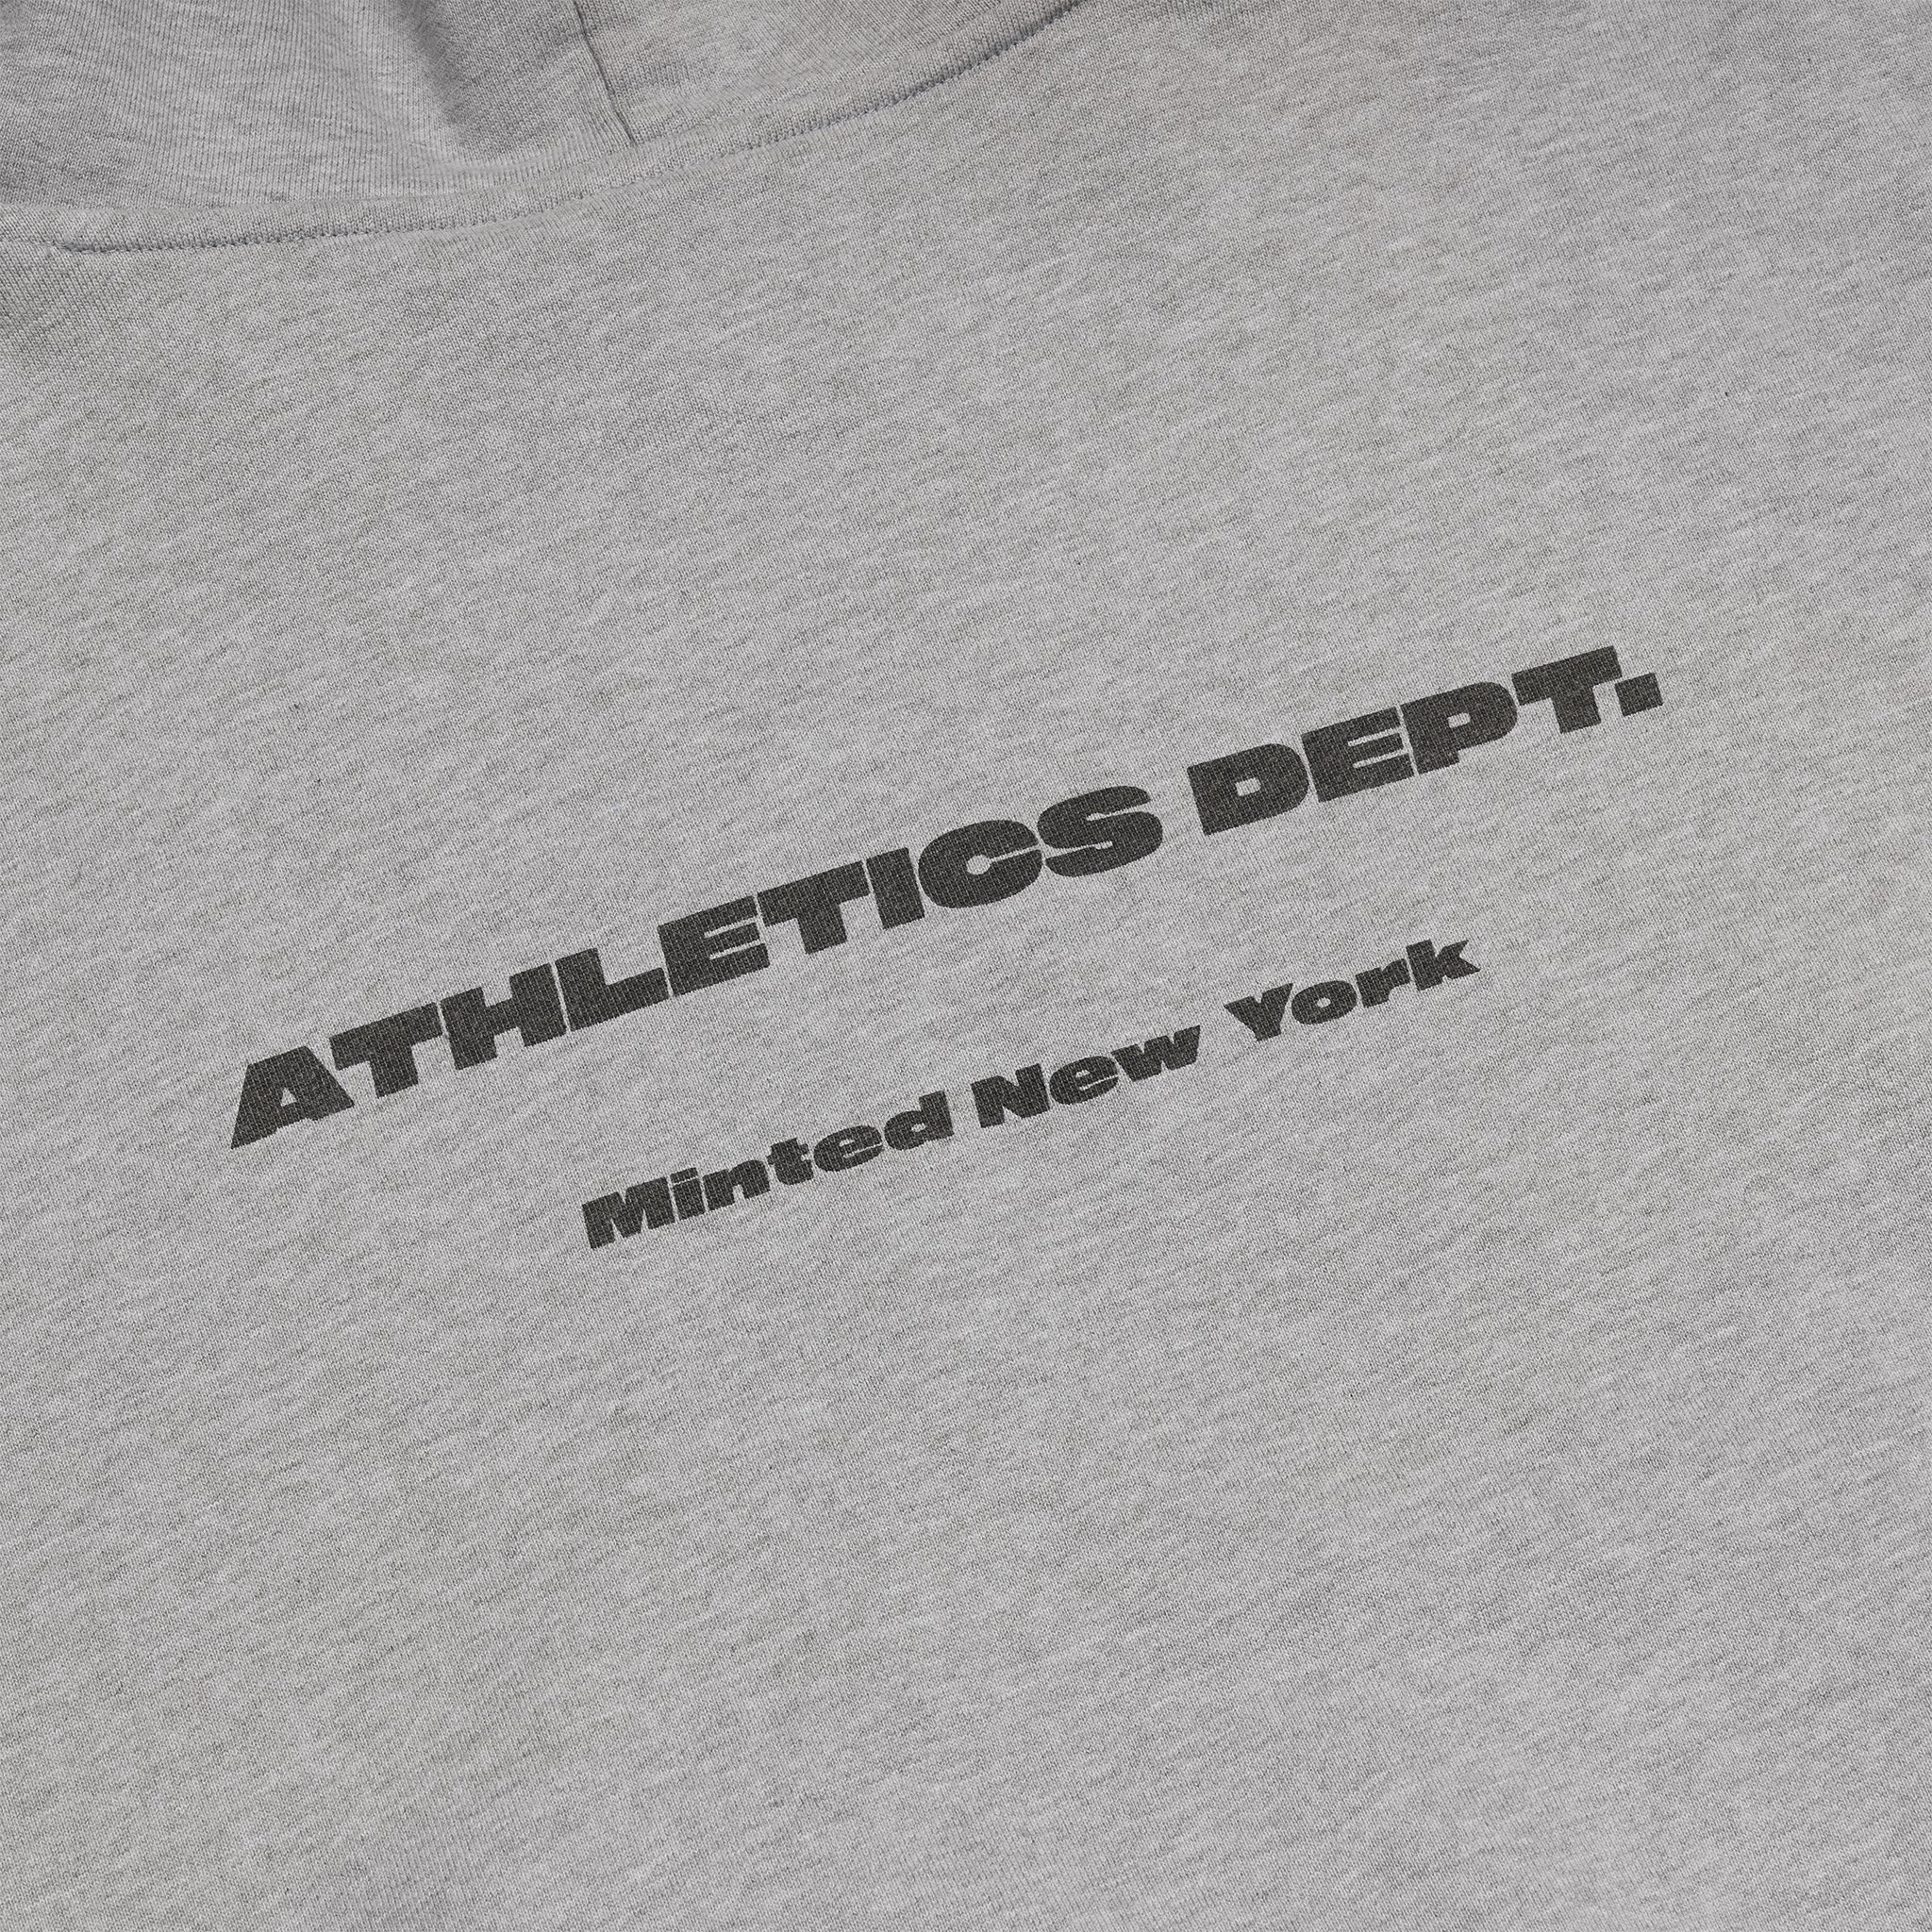 Athletics Dept. Hoodie - Minted New York